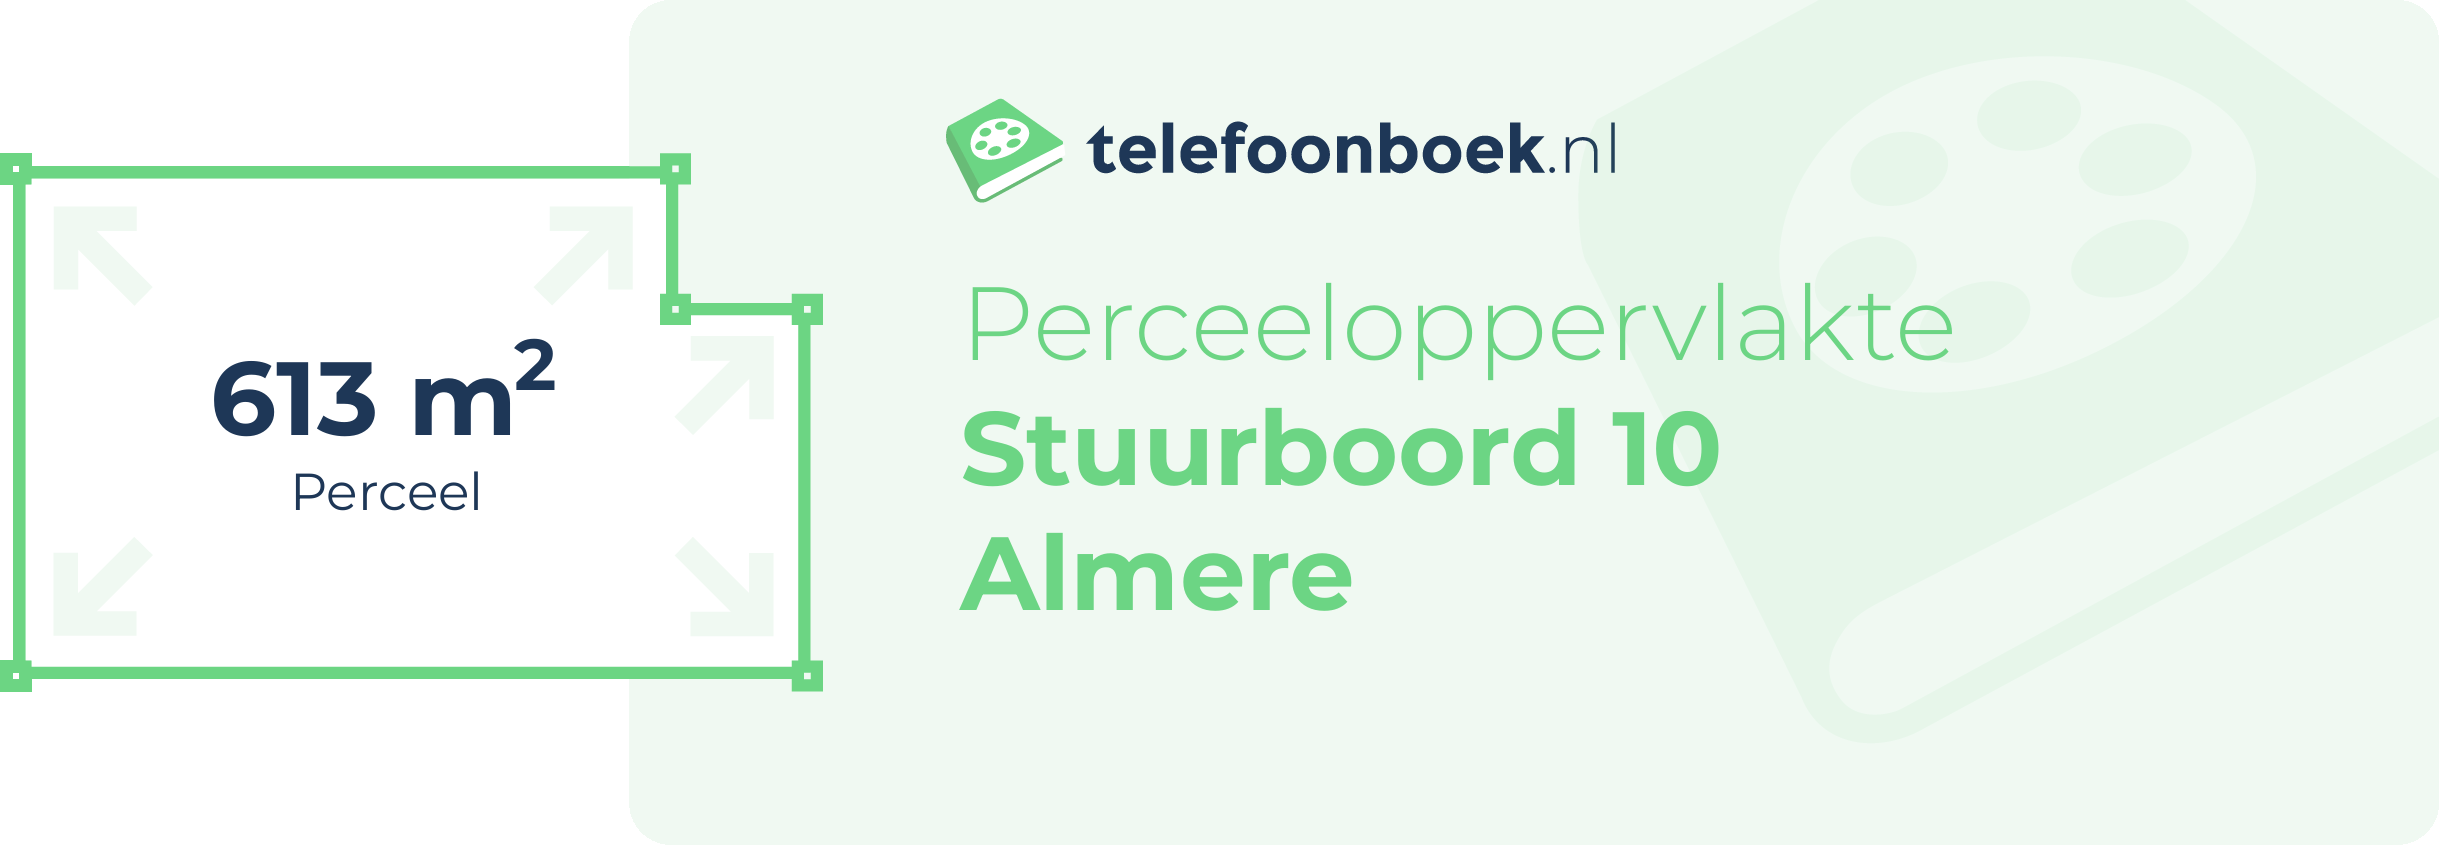 Perceeloppervlakte Stuurboord 10 Almere